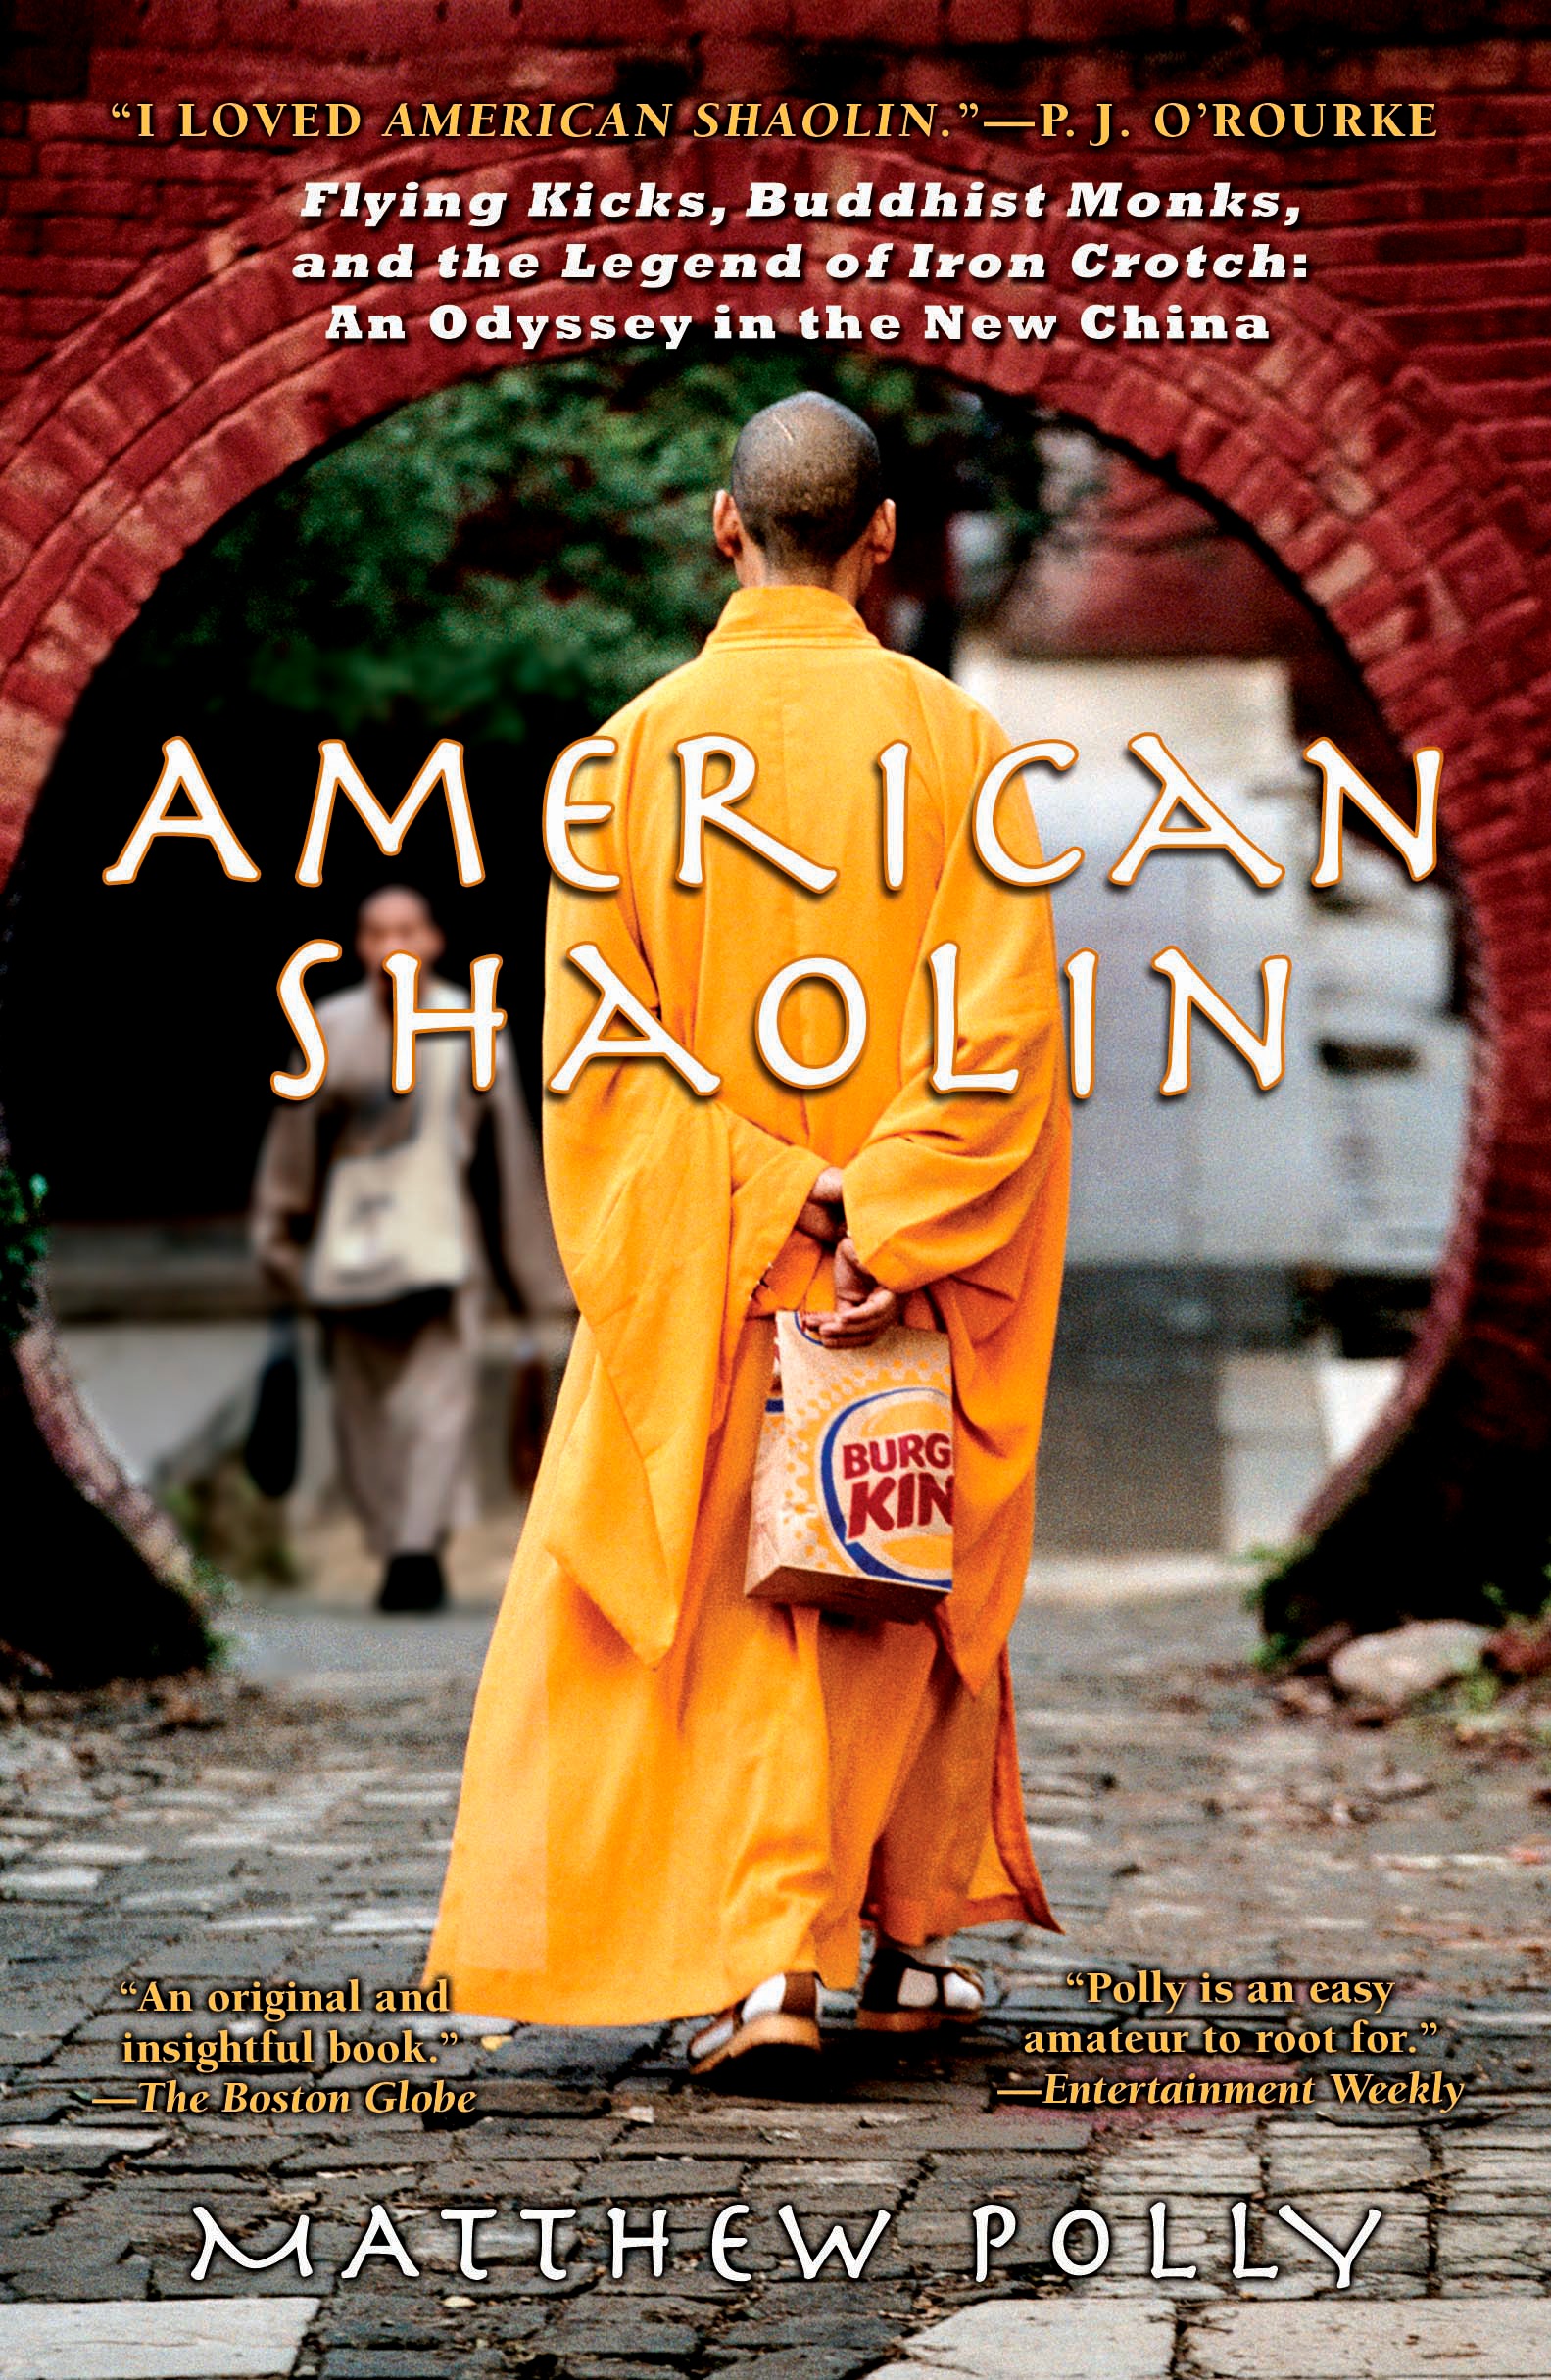 American Shaolin by Matthew Polly